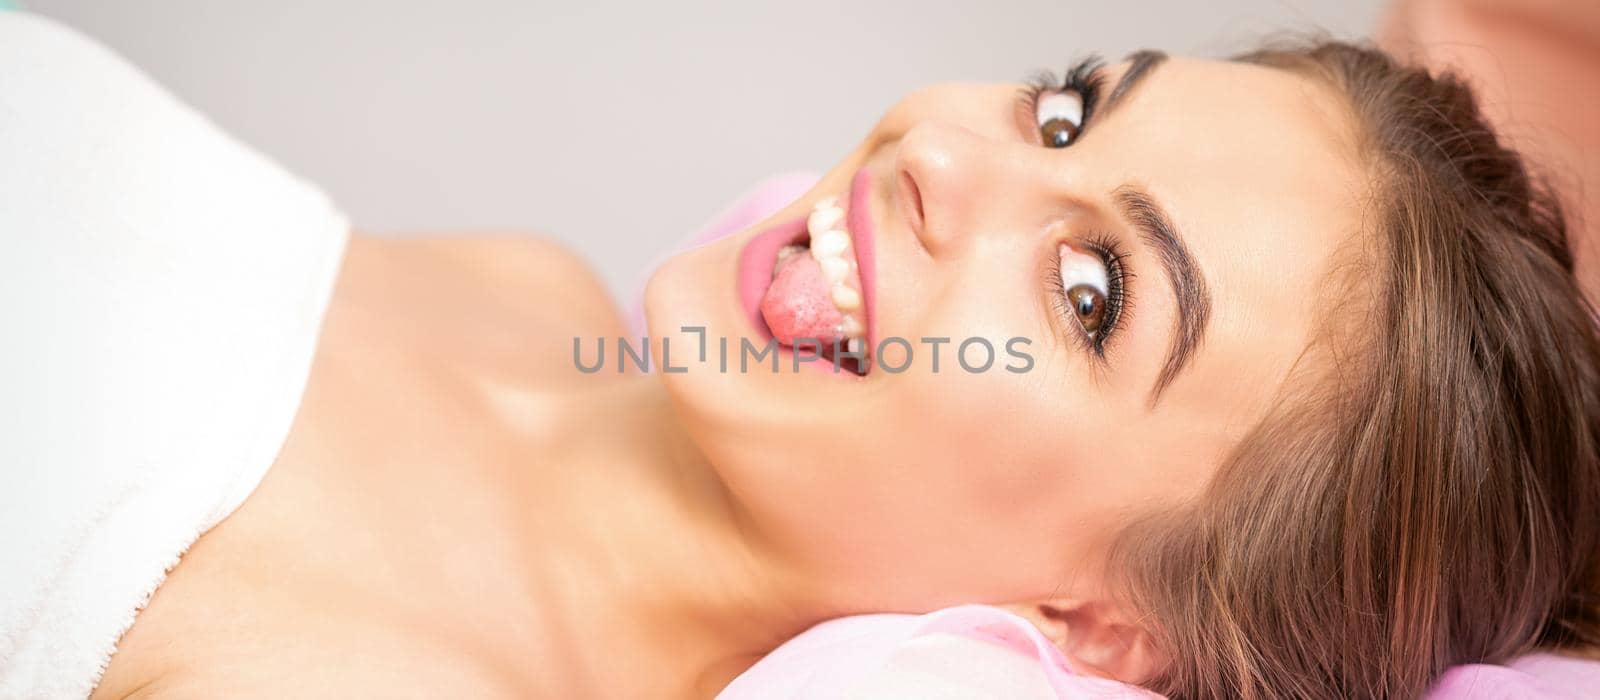 Young woman sticking out tongue by okskukuruza